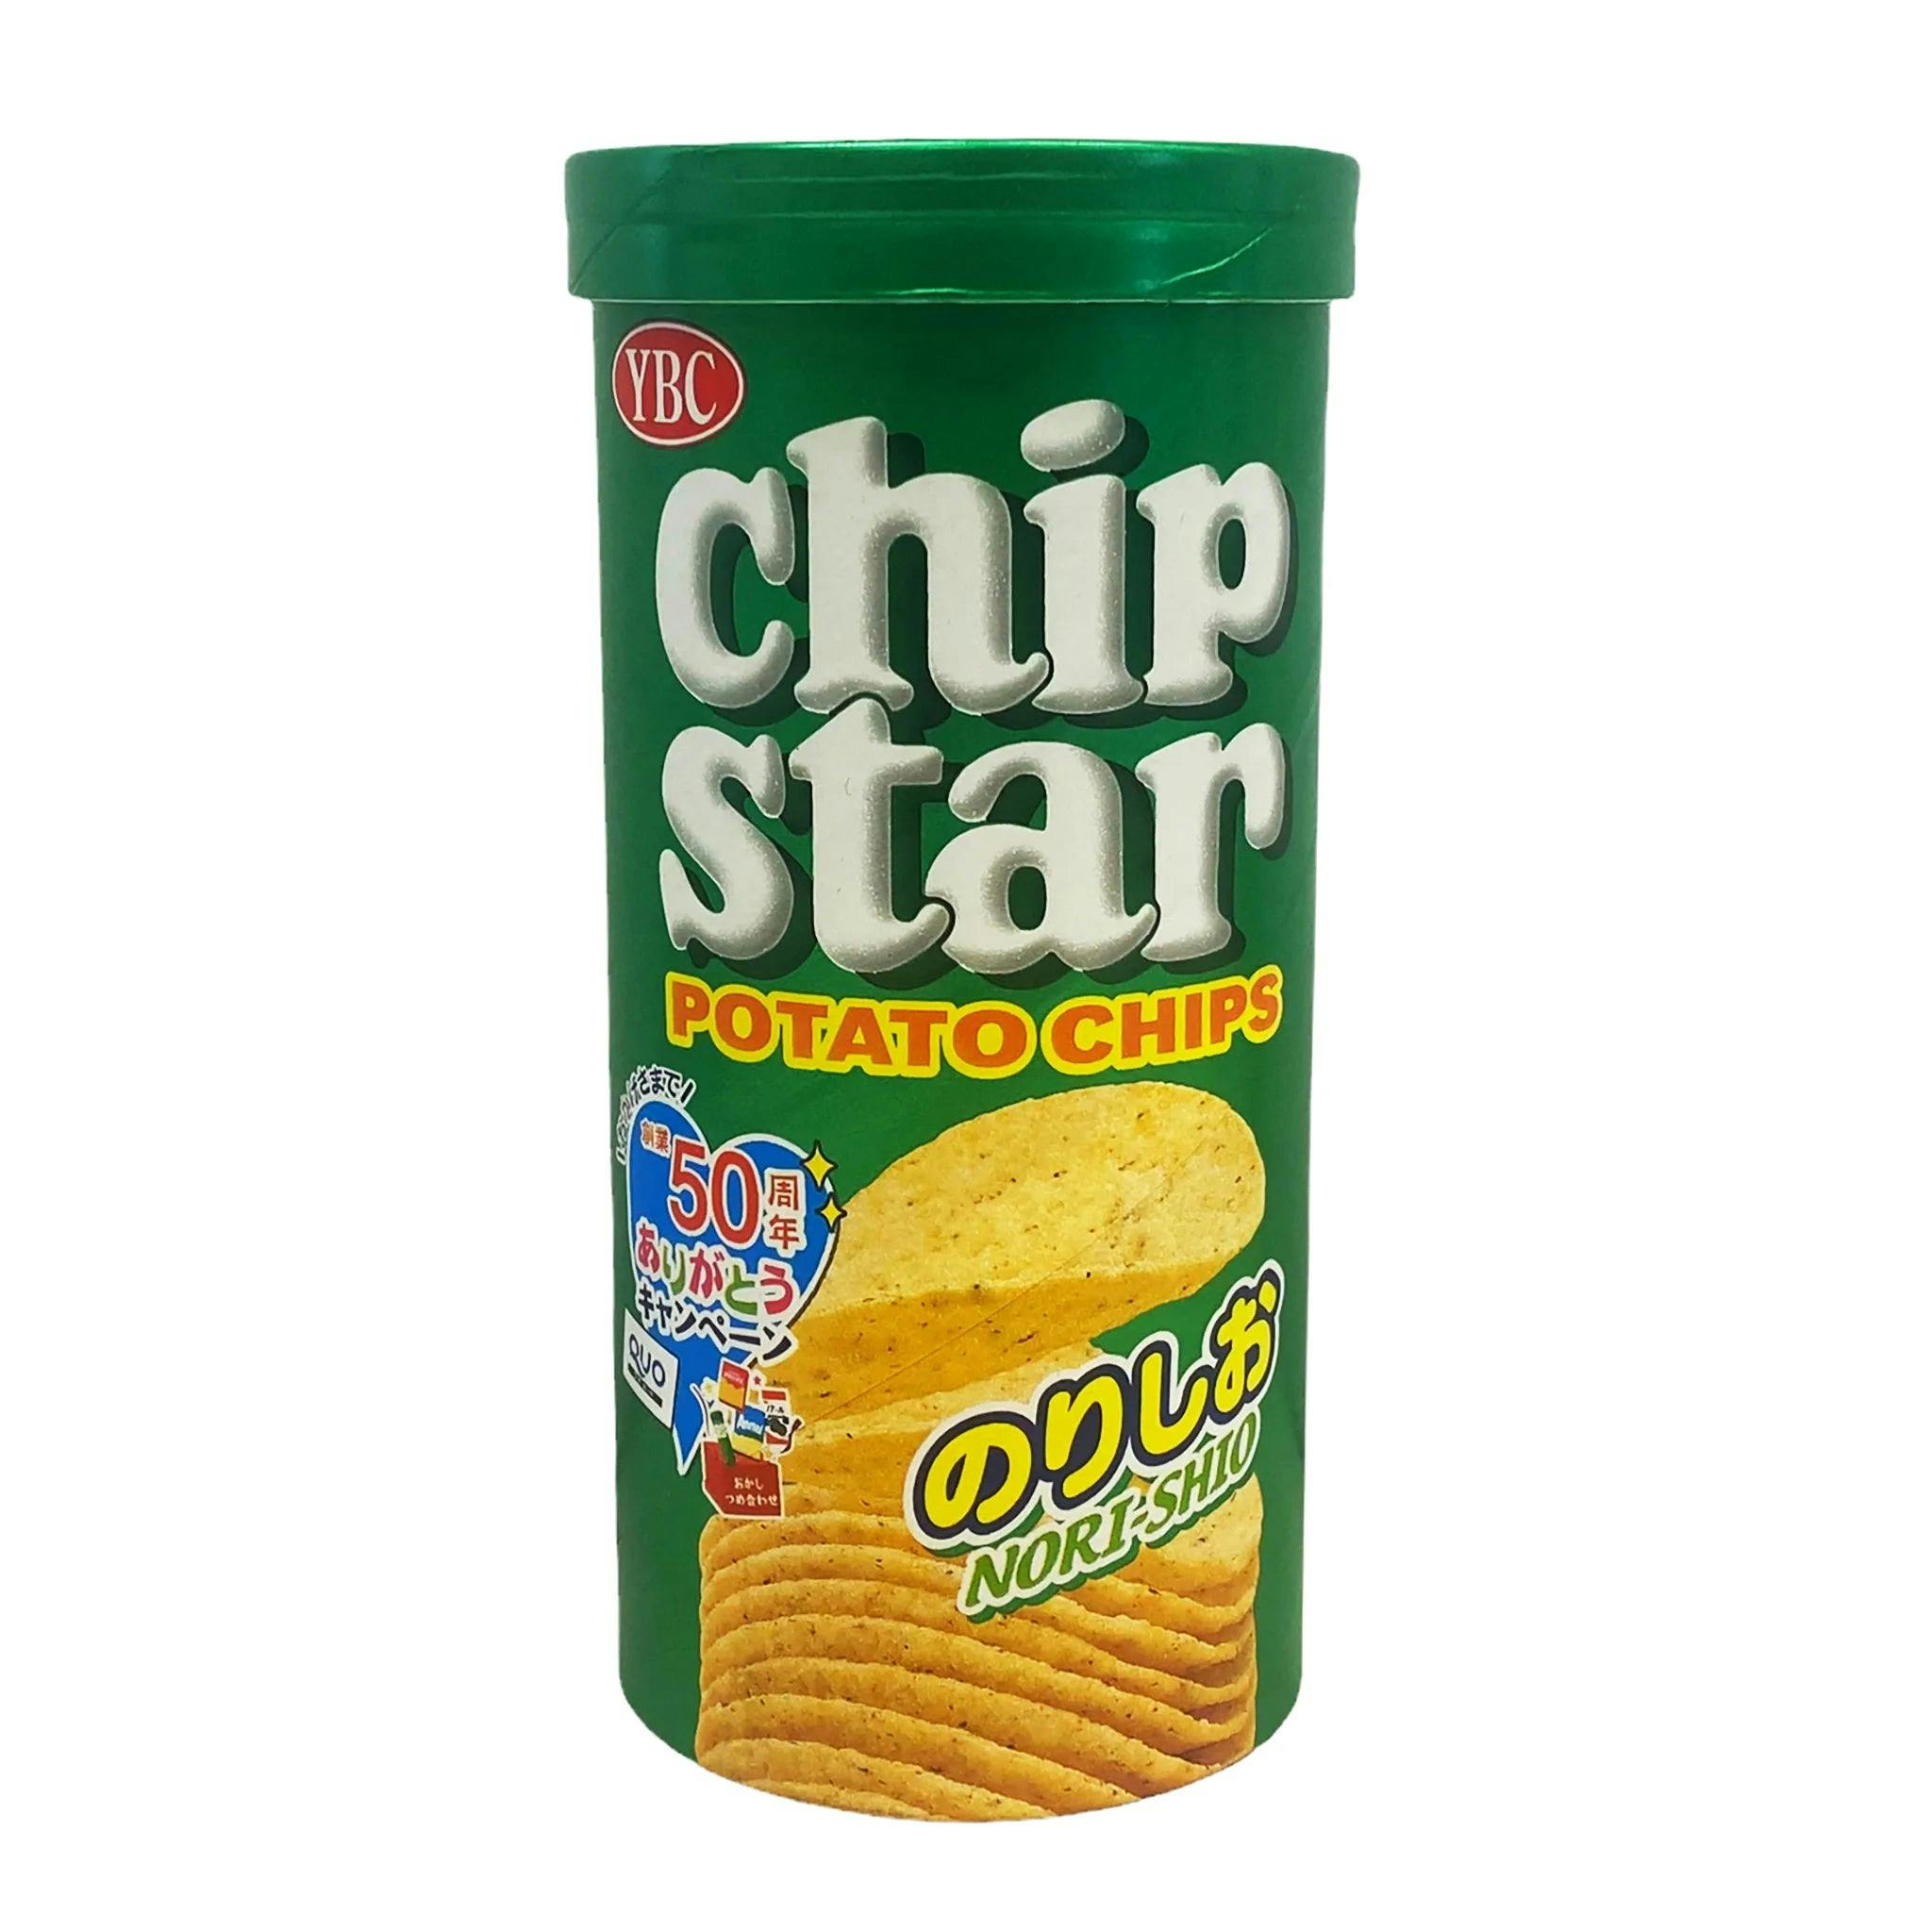 YBC Chip Star potato chips Seaweed flavor 明星薯片 海苔味